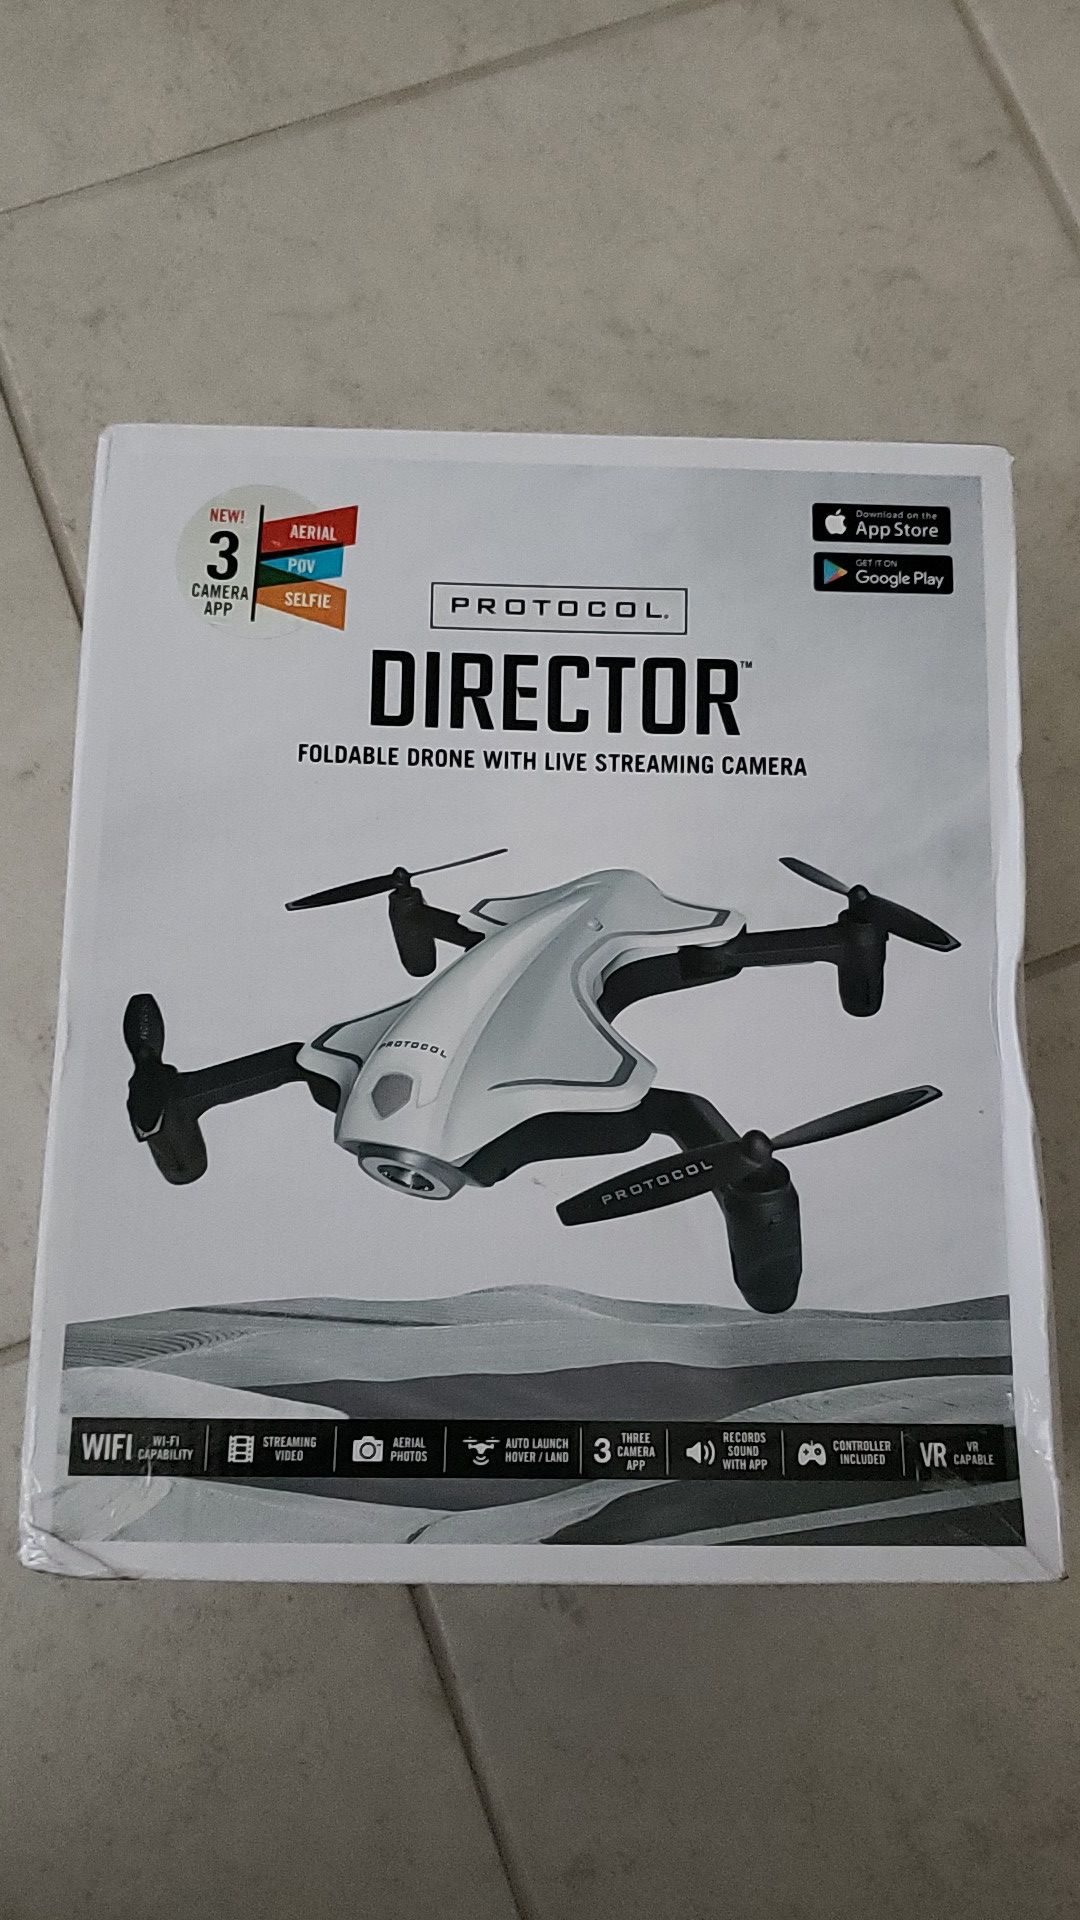 Protocol Director drone